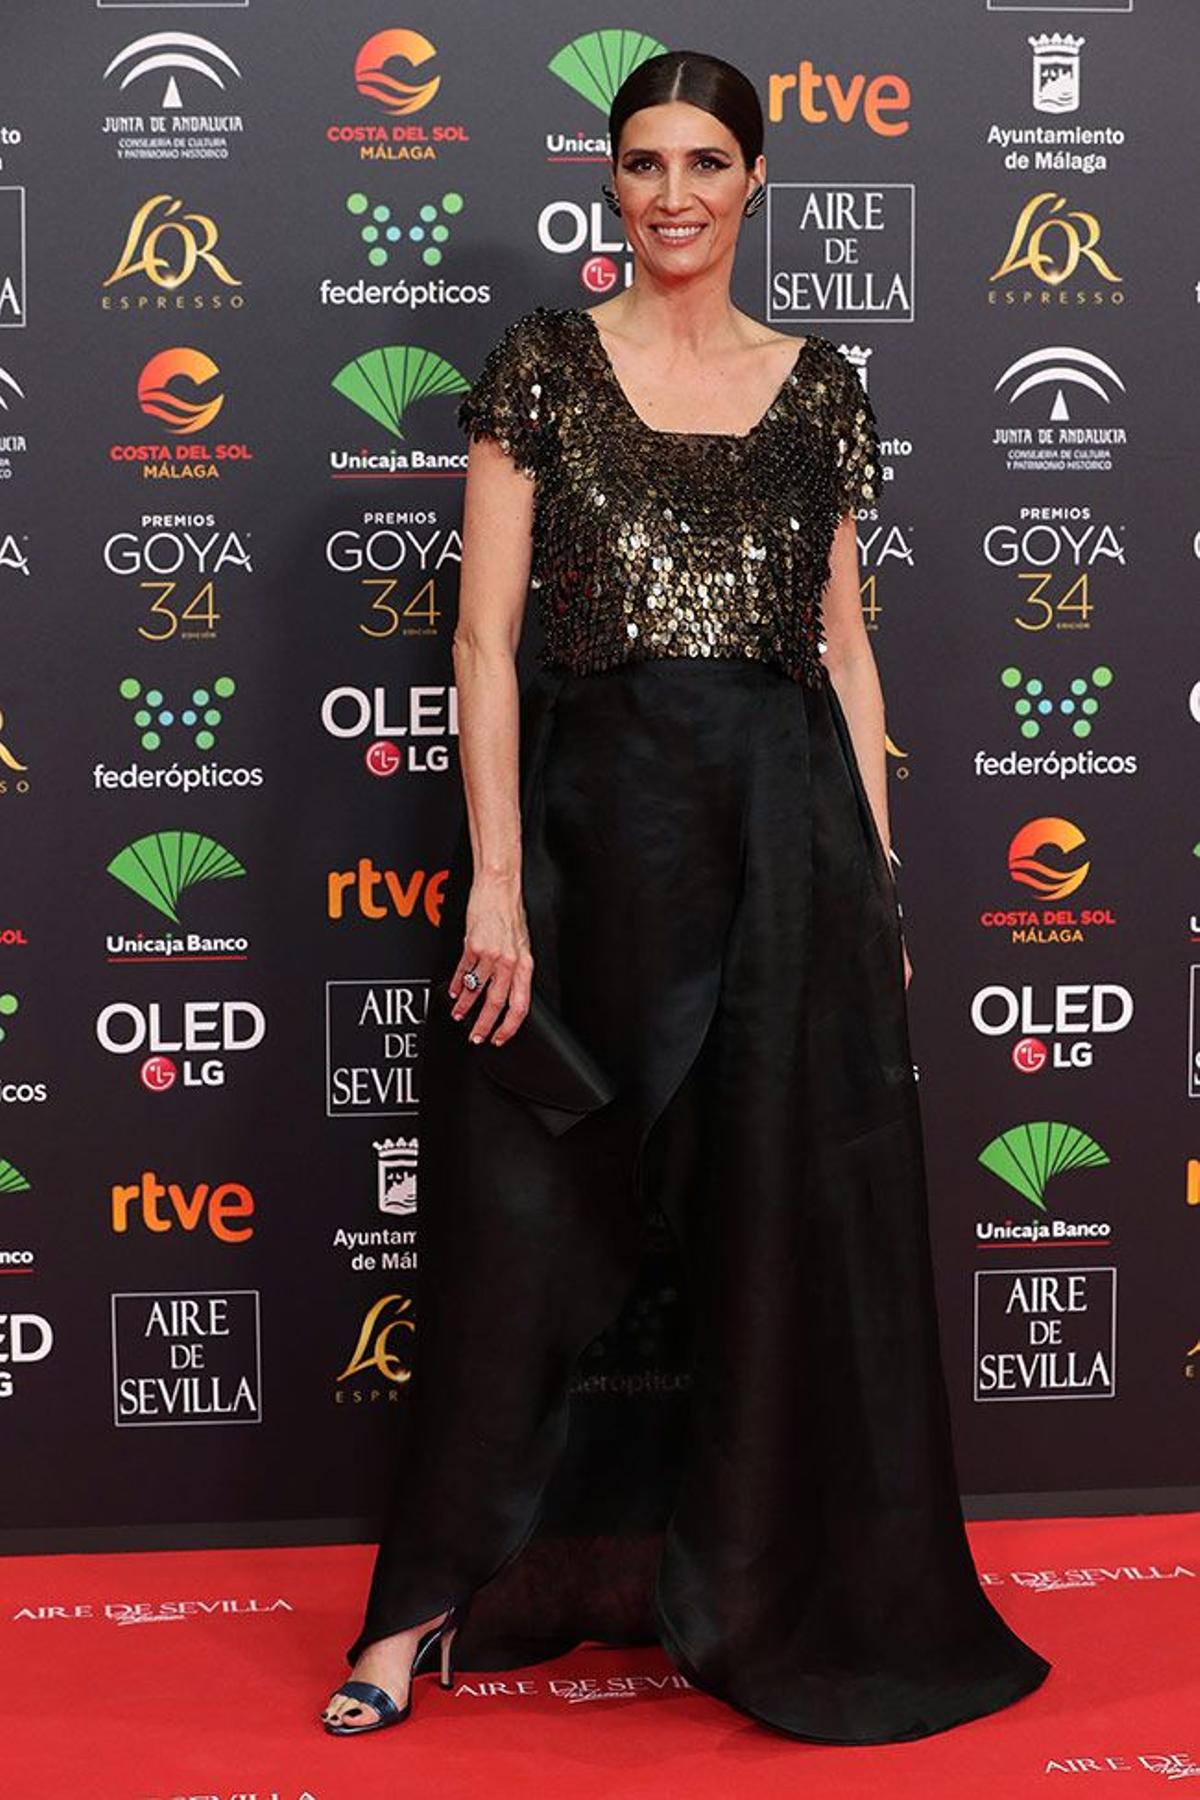 Premios Goya 2020, Elia Galera